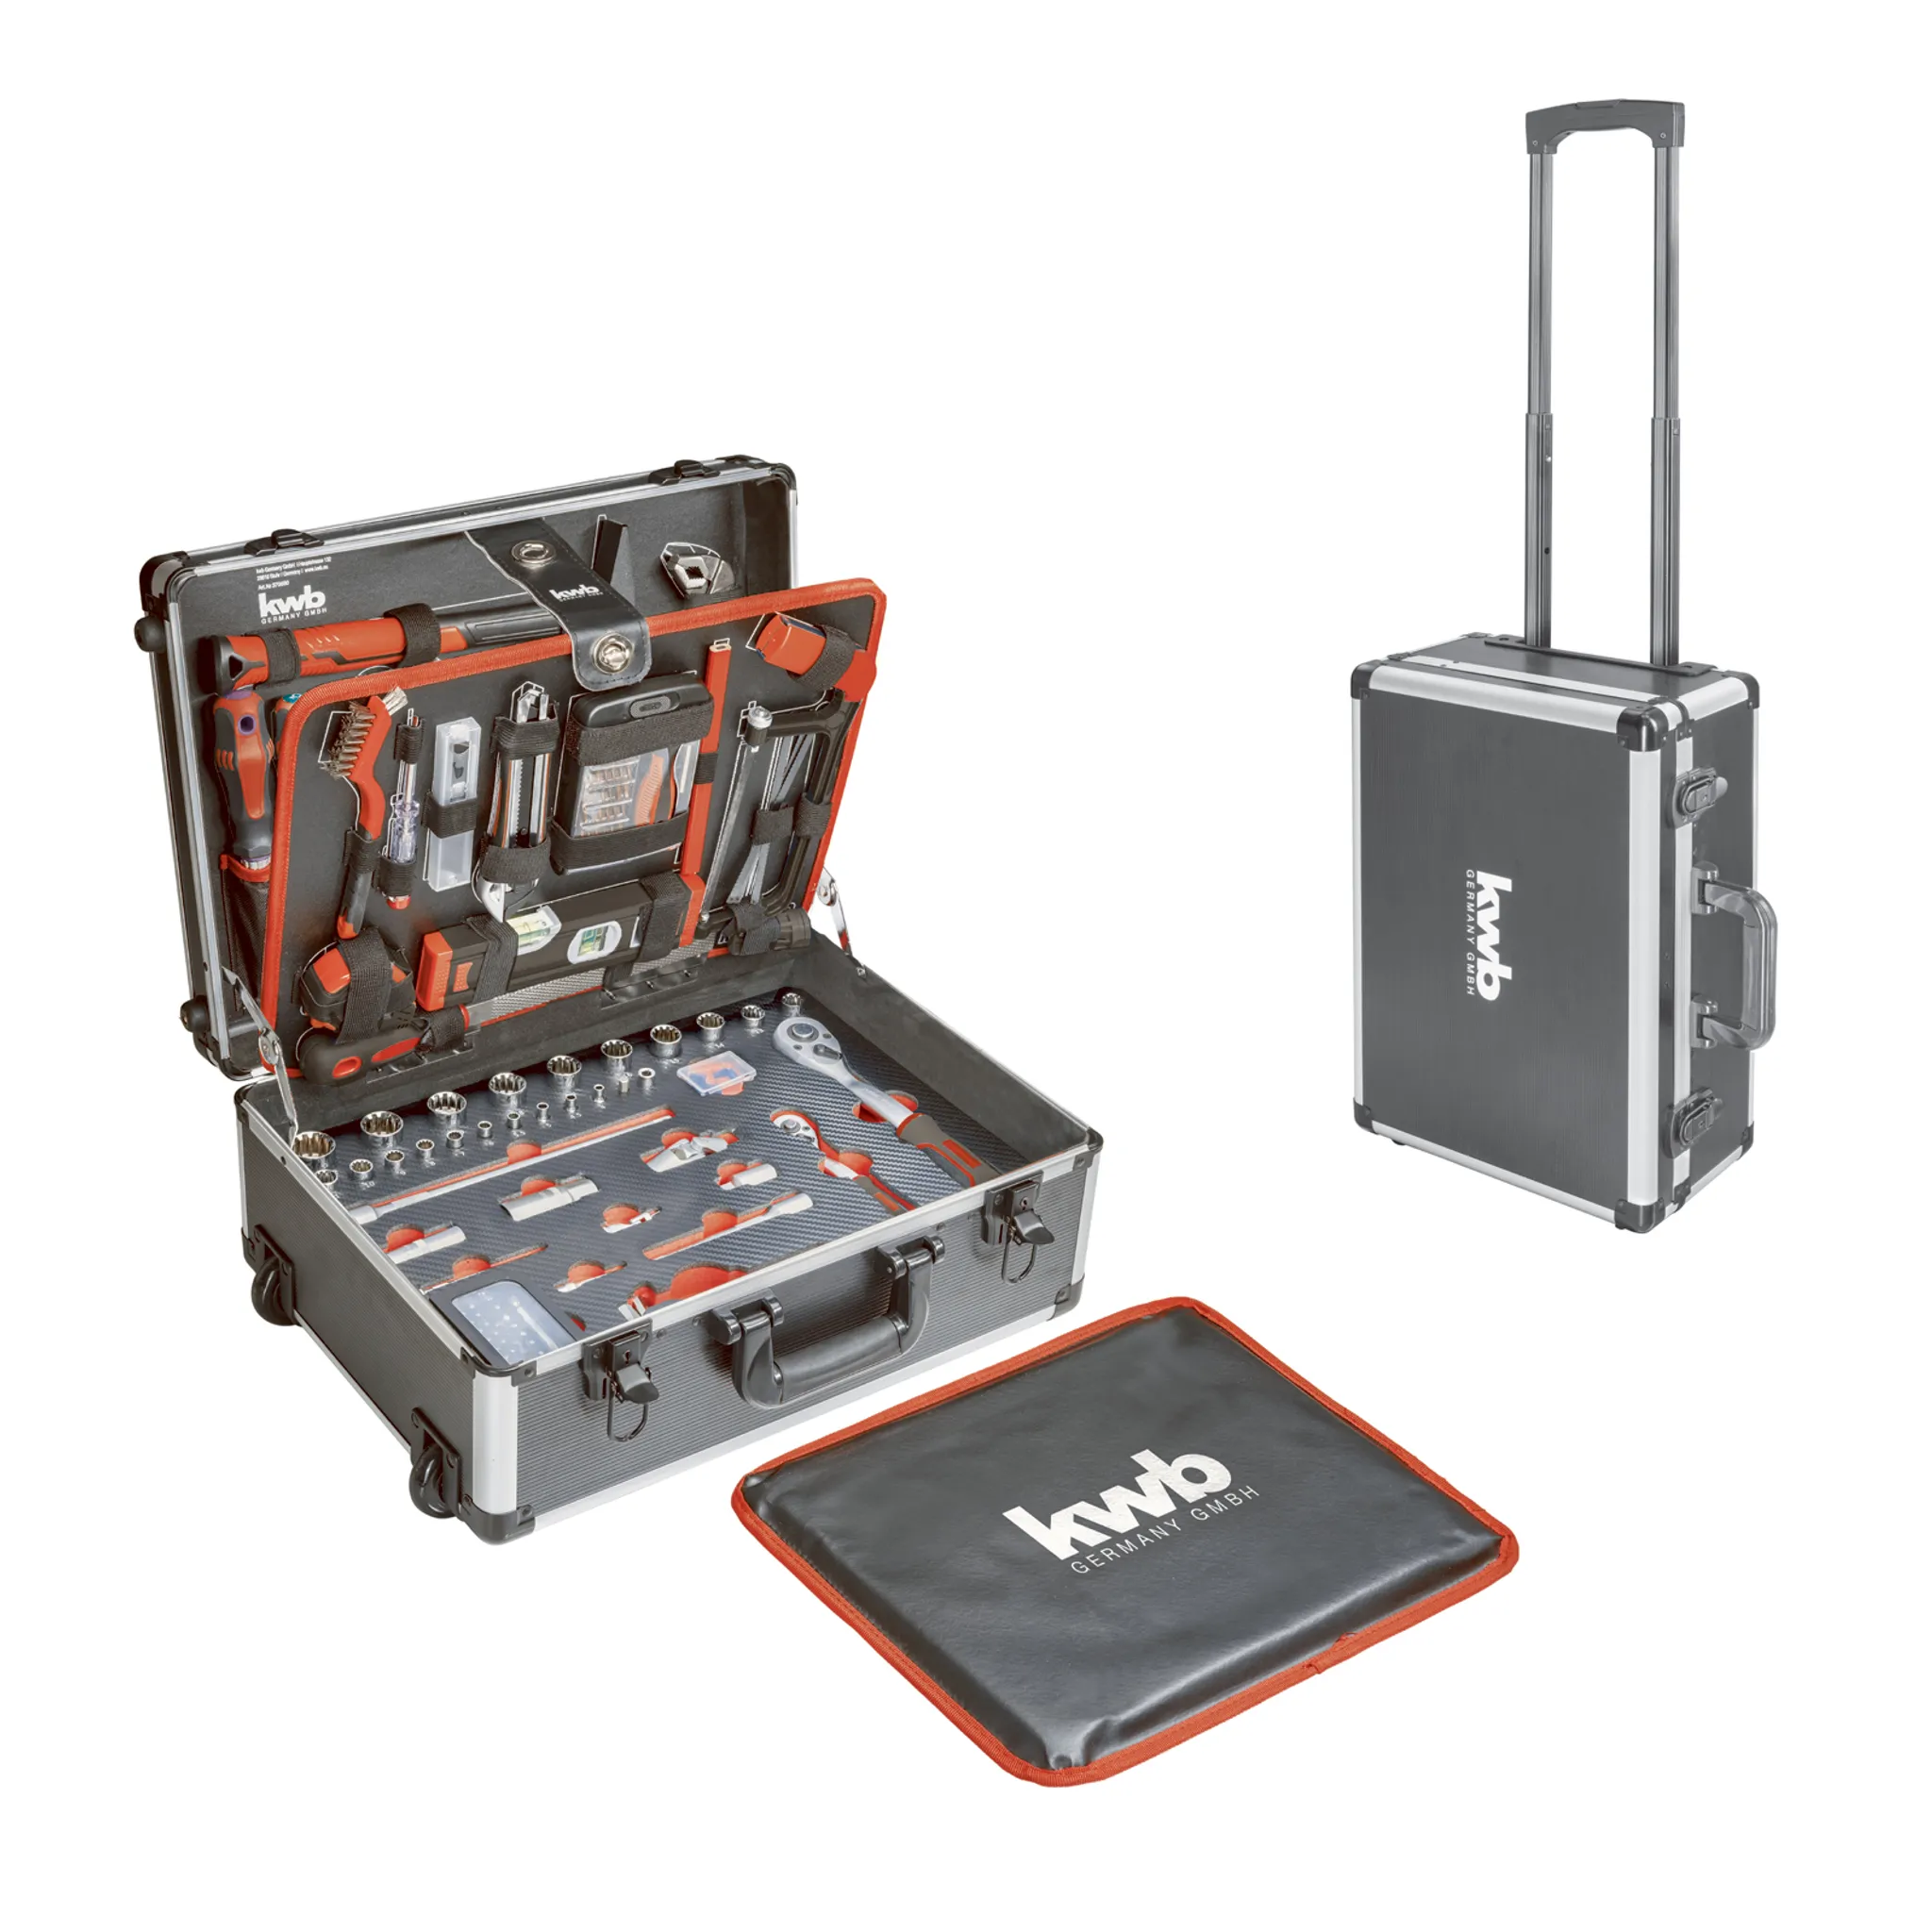 kwb Werkzeug-Koffer Trolley inkl. Werkzeug-Set, 175 robust -teilig, gefüllt